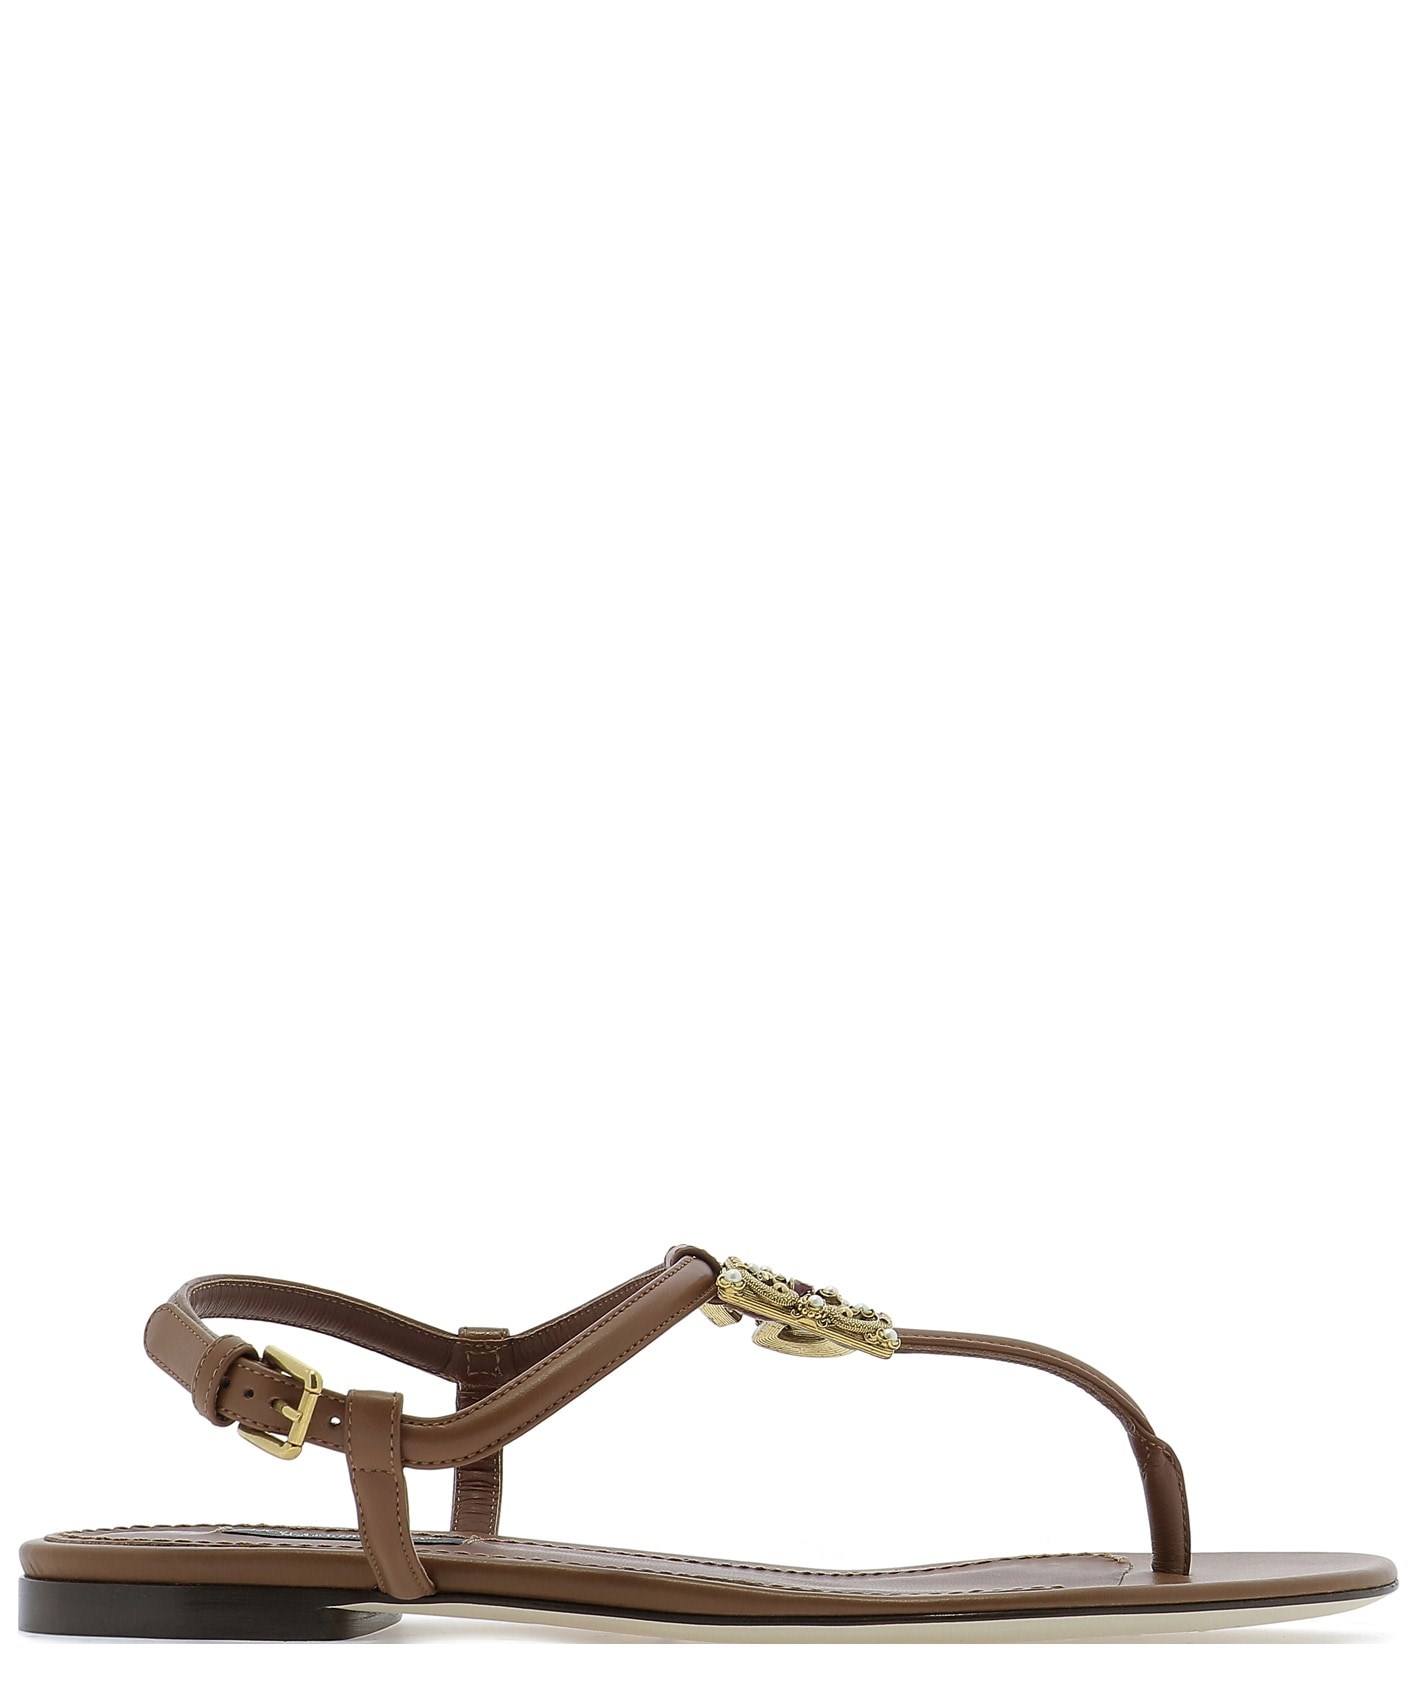 【Dolce & Gabbana】Leather sandal with logo